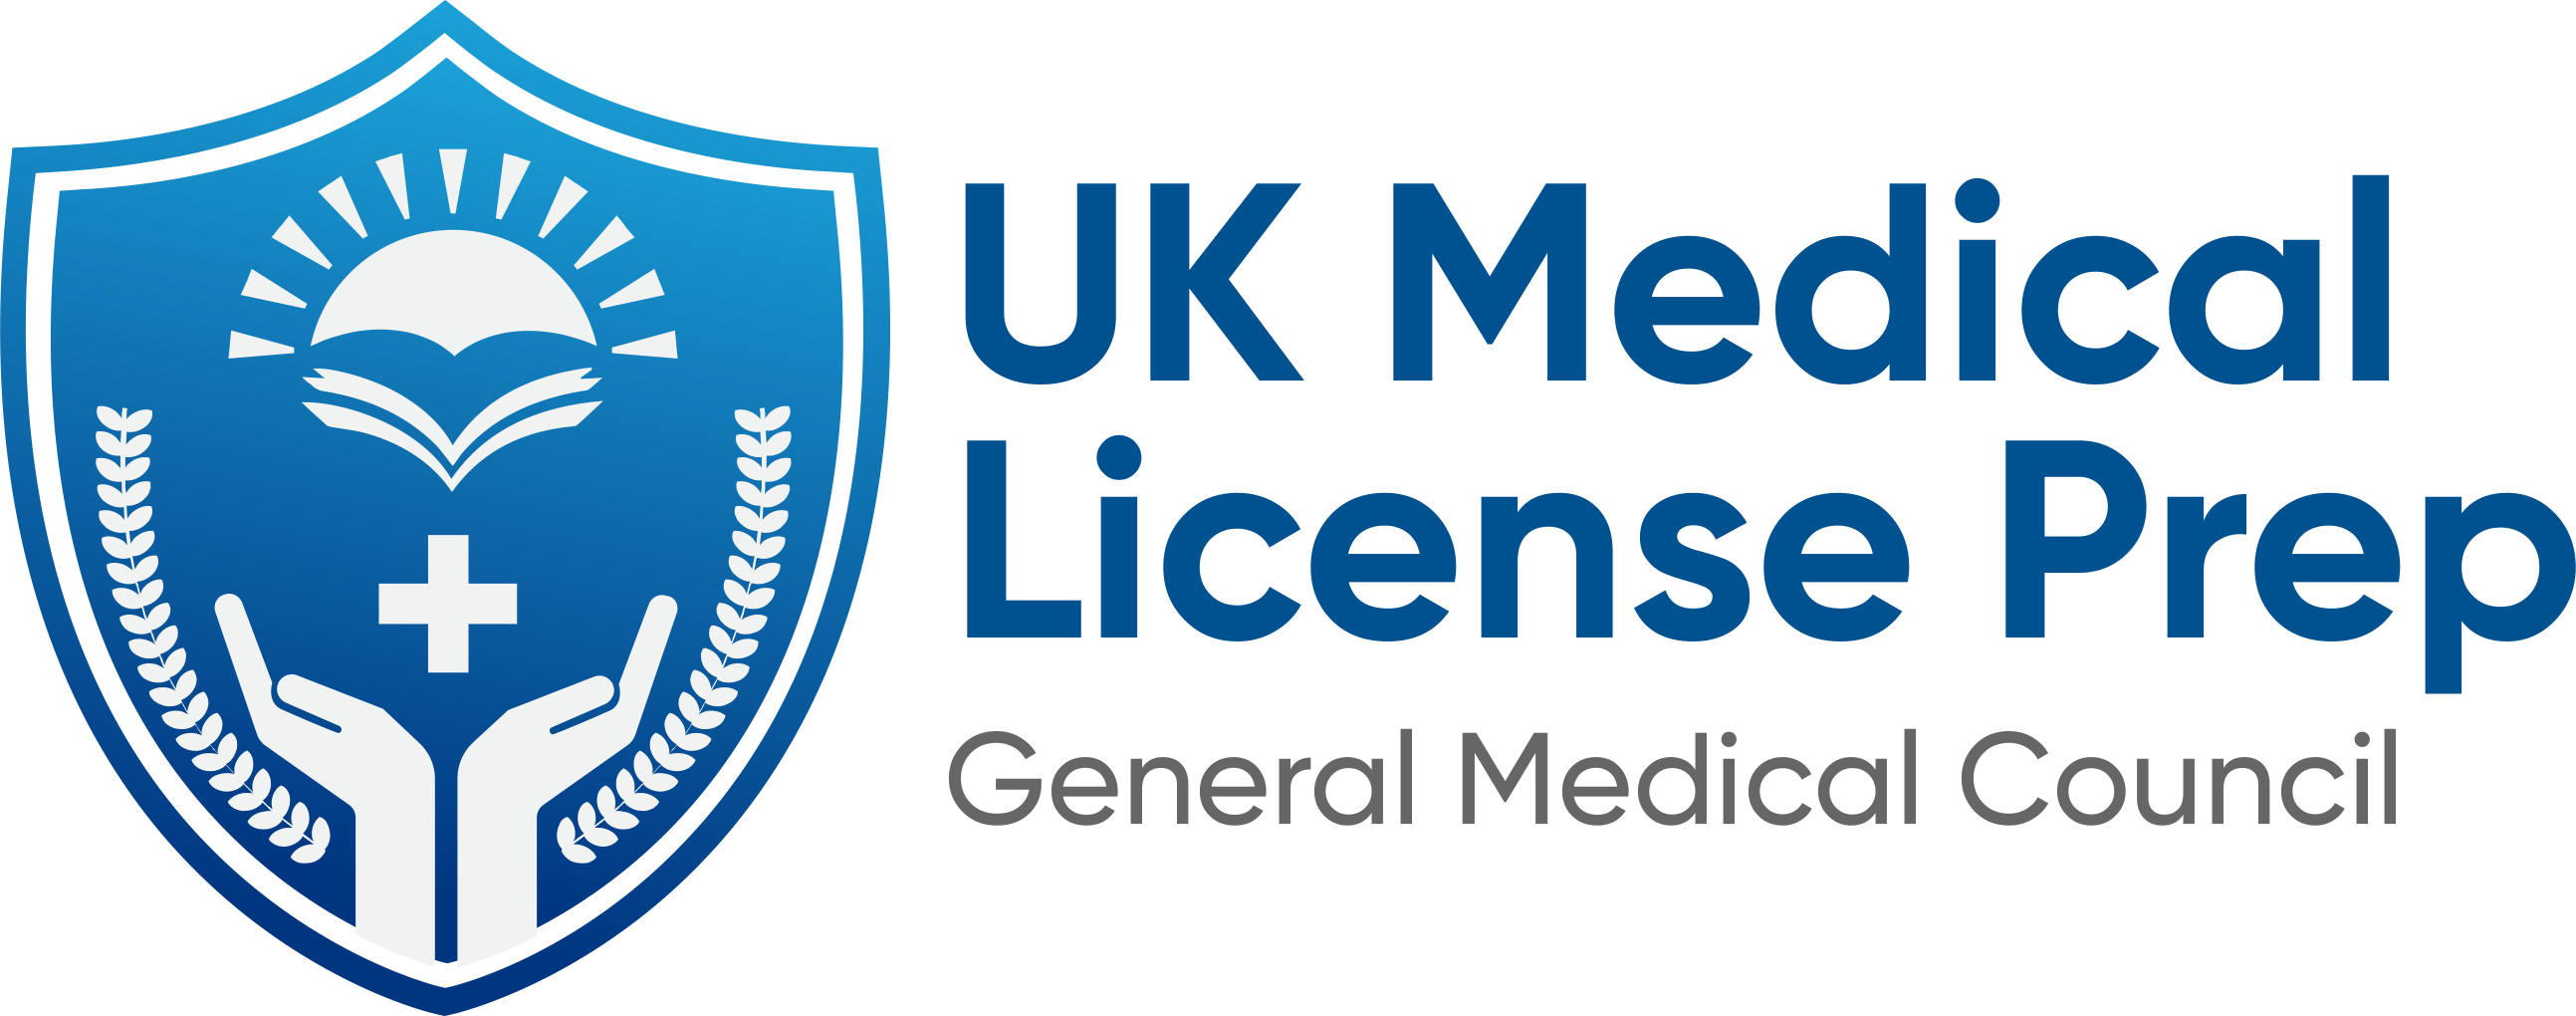 Uk Medical License Prep